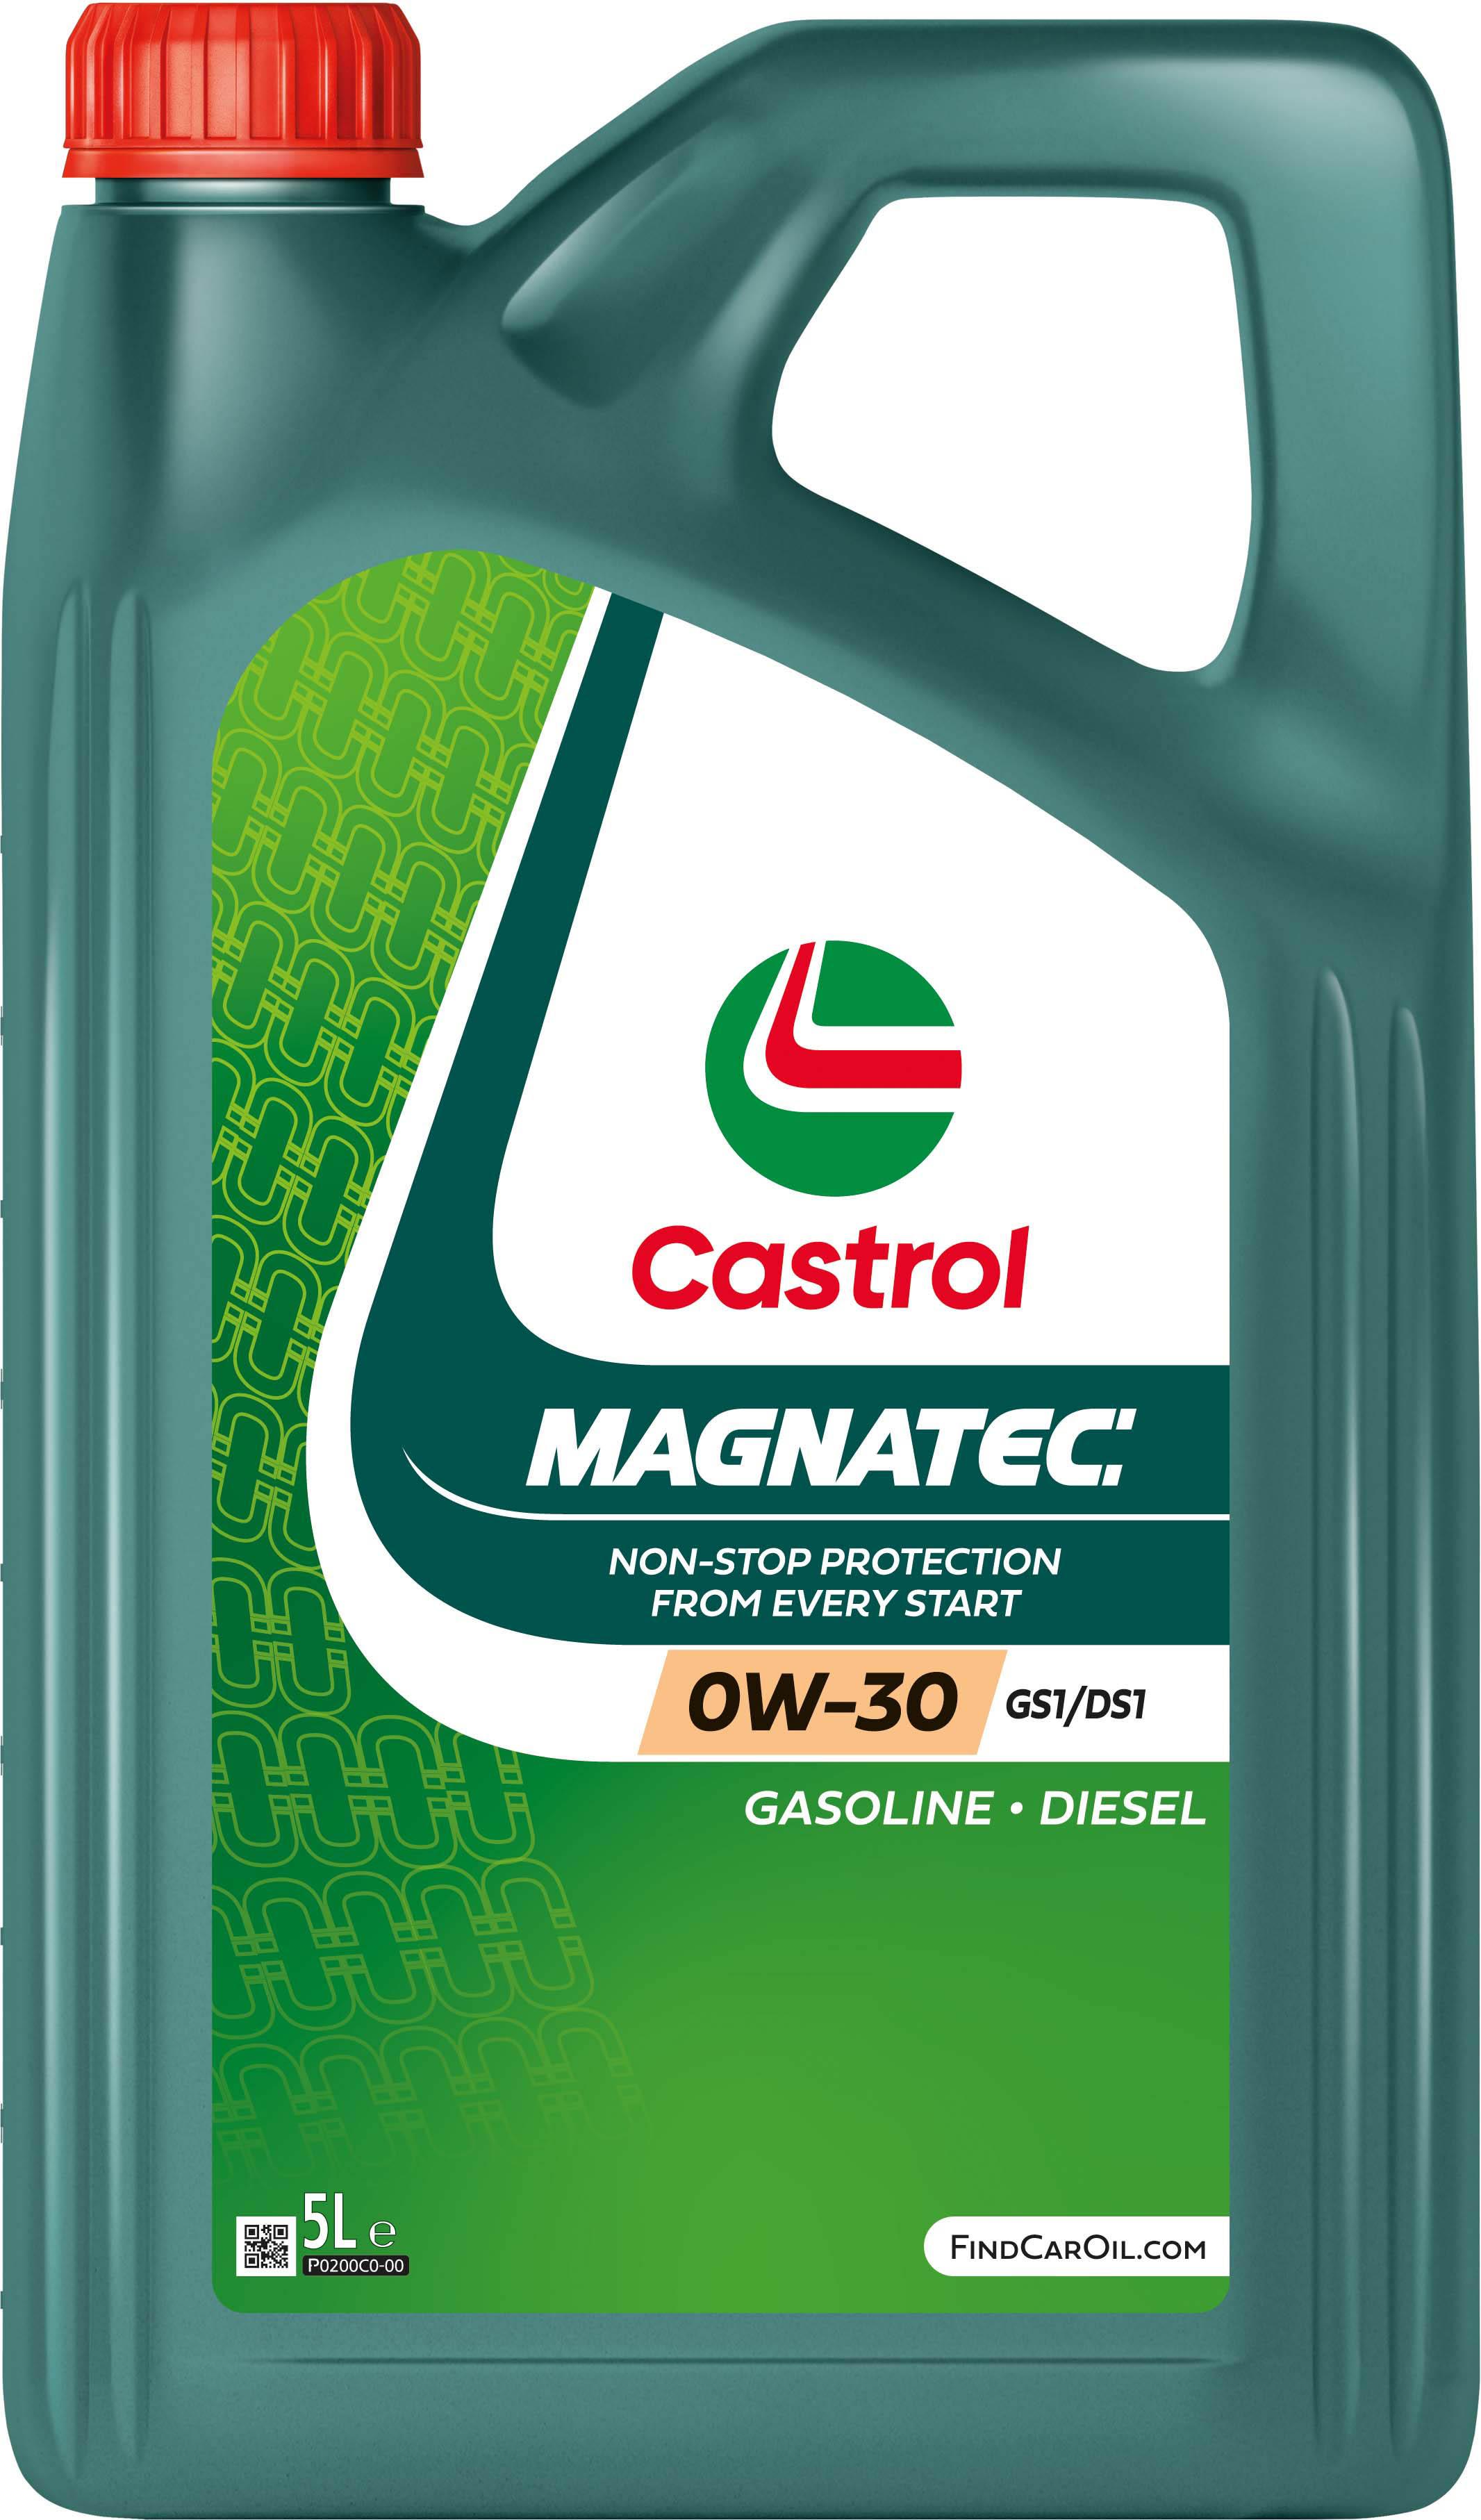 Castrol Magnatec 0W-30 GS1/DS1 5L | Halfords UK